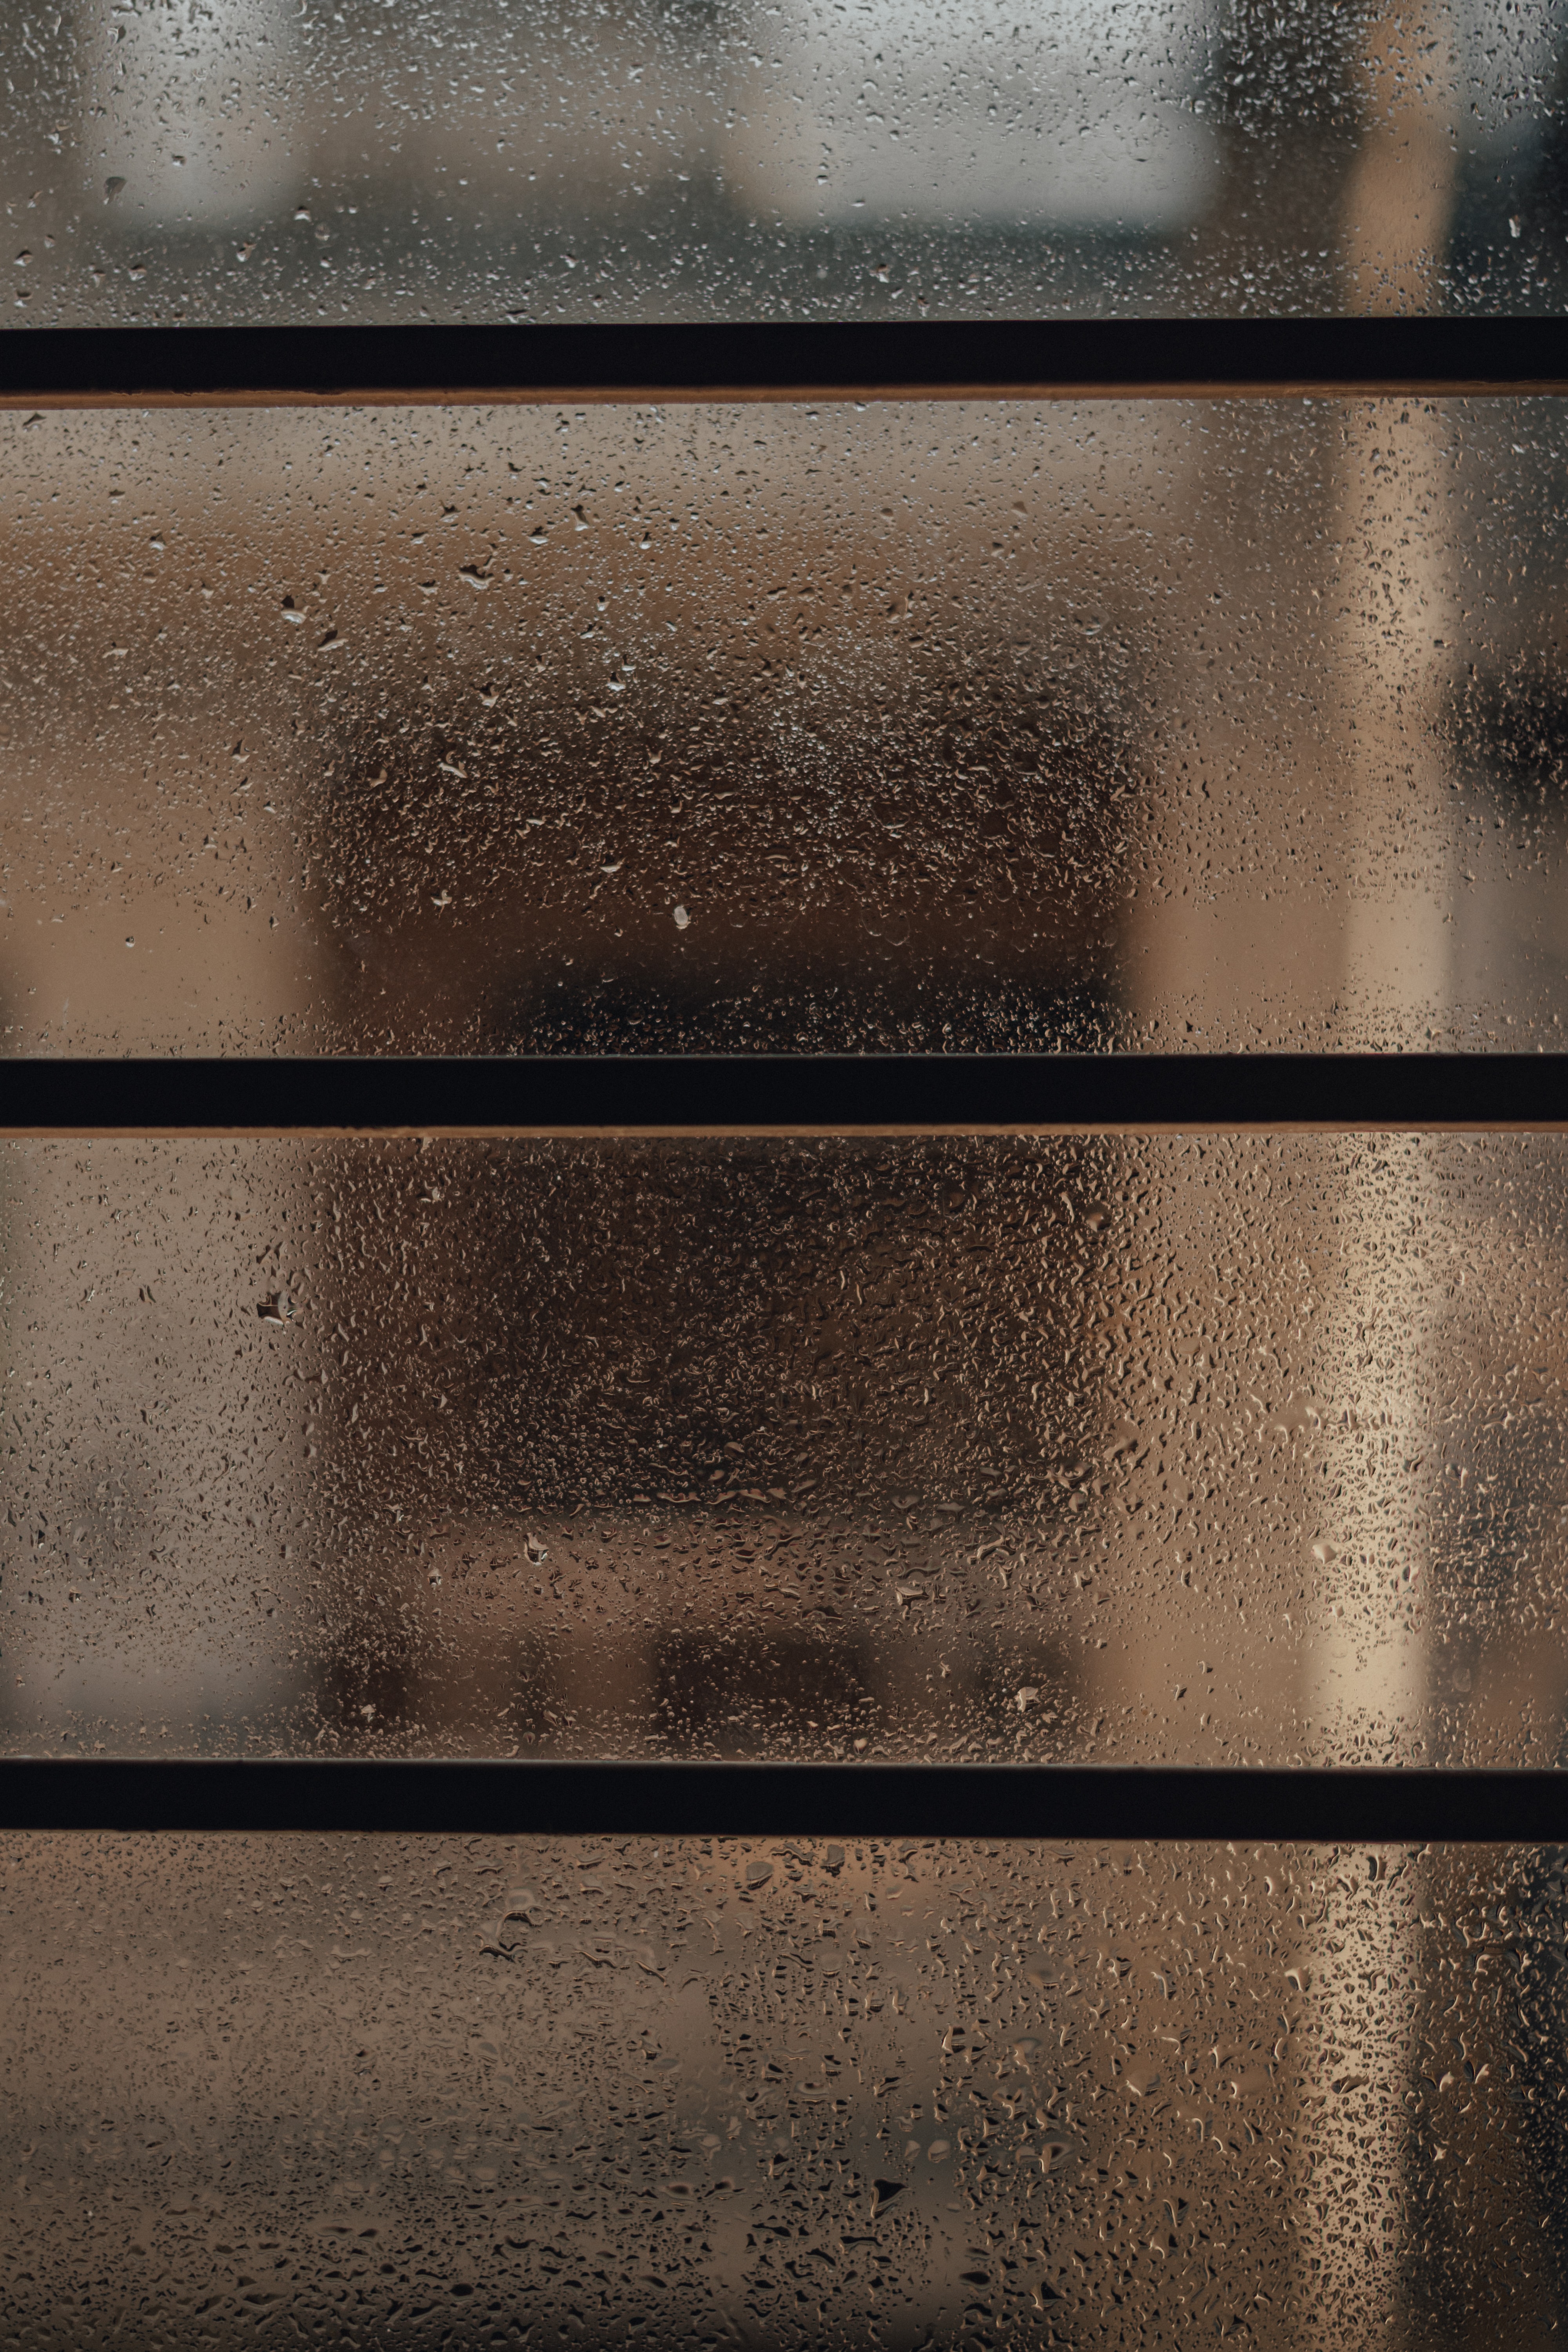 glass, miscellanea, window, rain Cell Phone Image